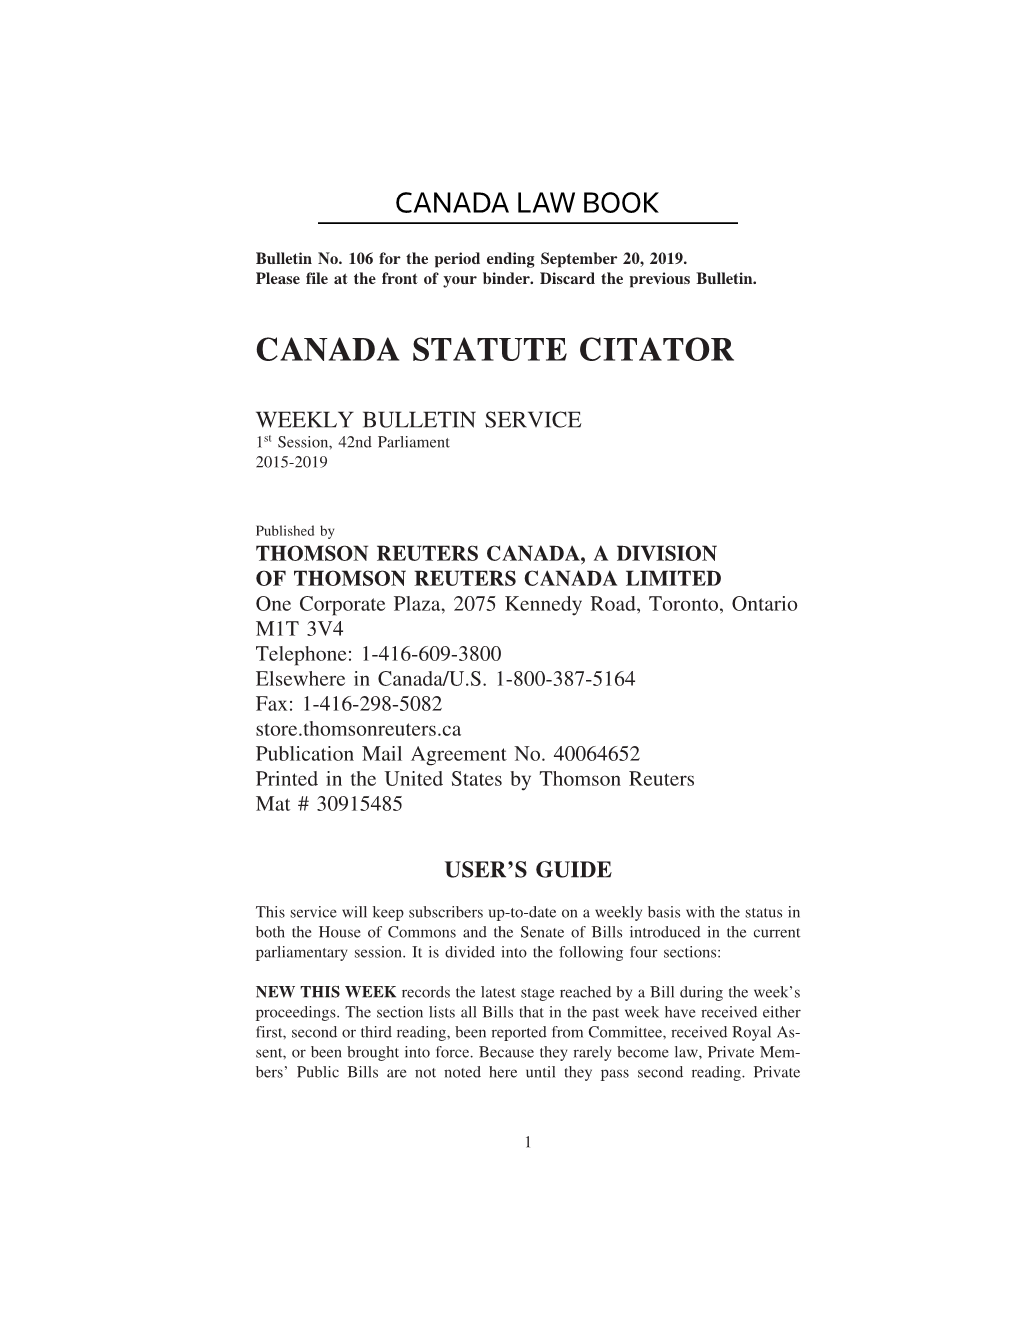 Canada Statute Citator